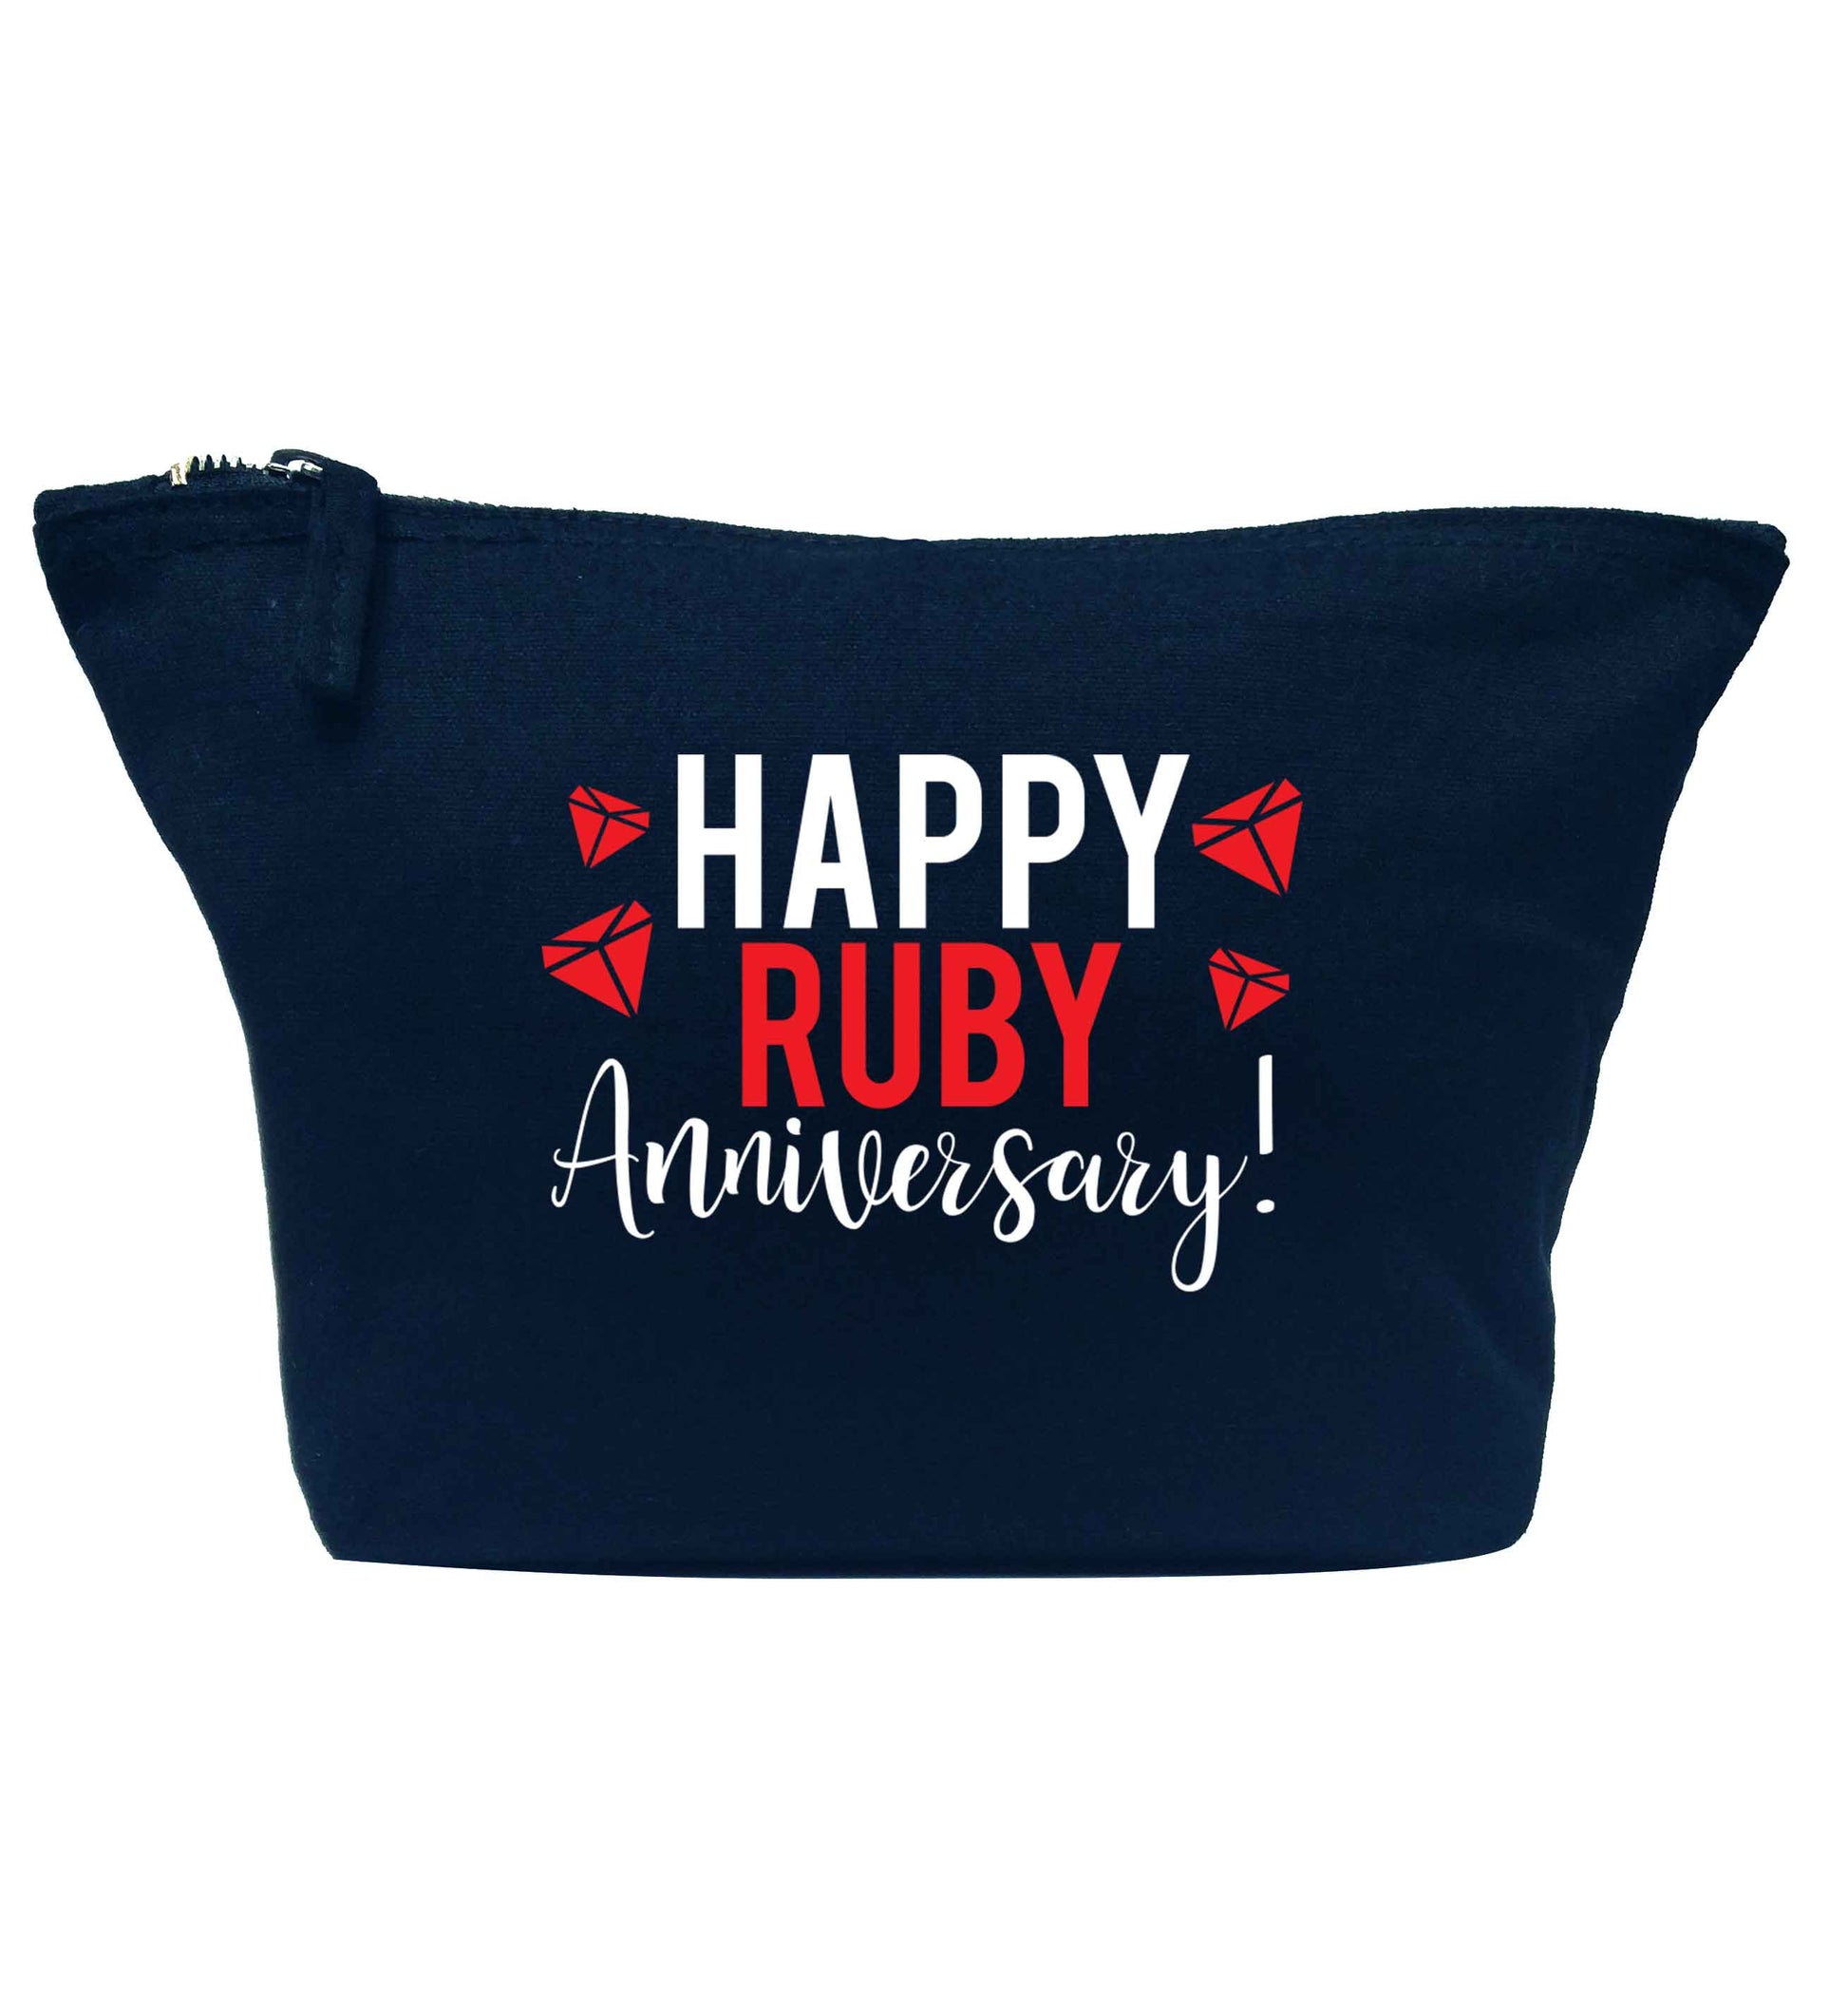 Happy ruby anniversary! navy makeup bag